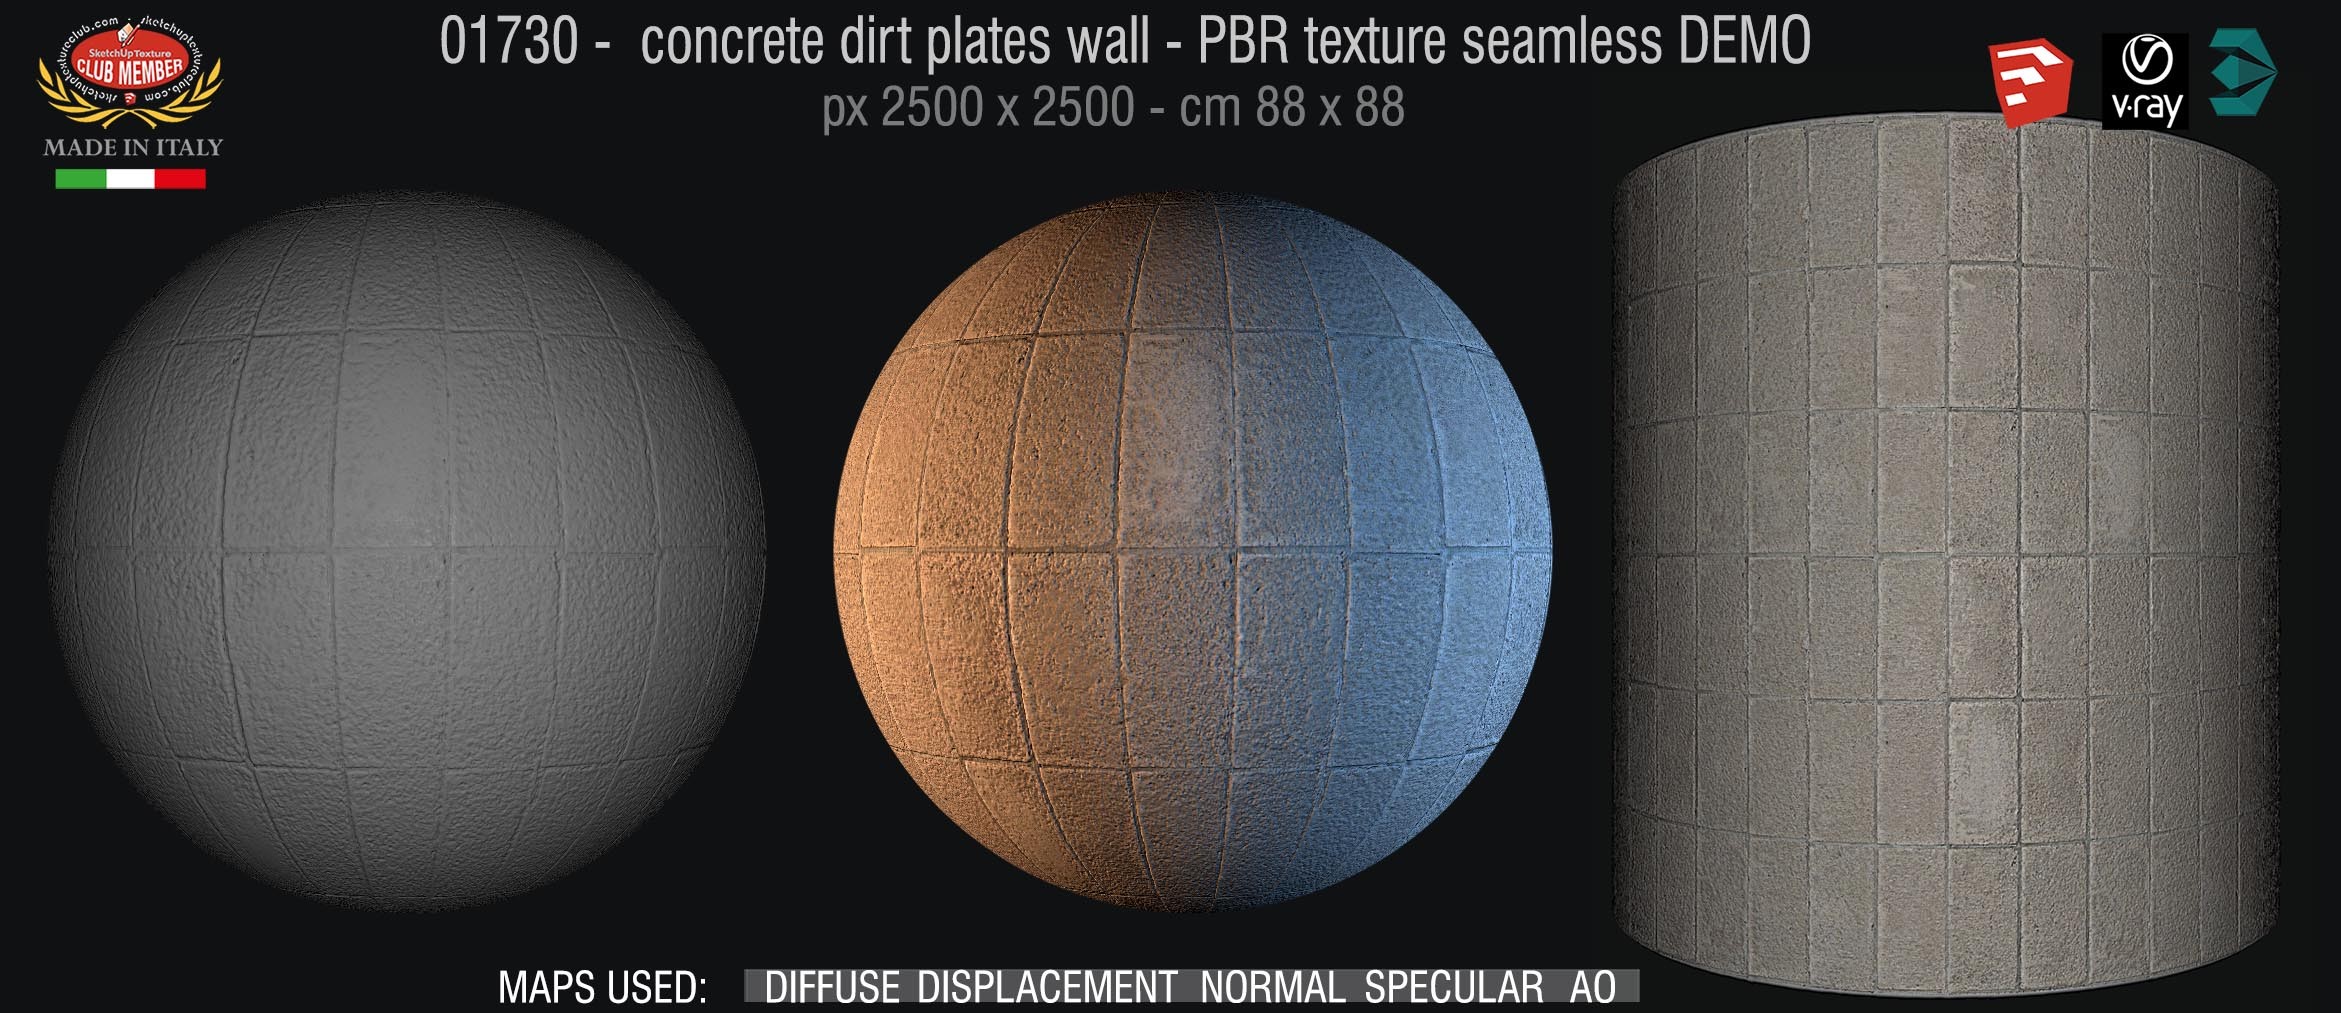 01730 concrete dirt plates wall PBR texture seamless DEMO